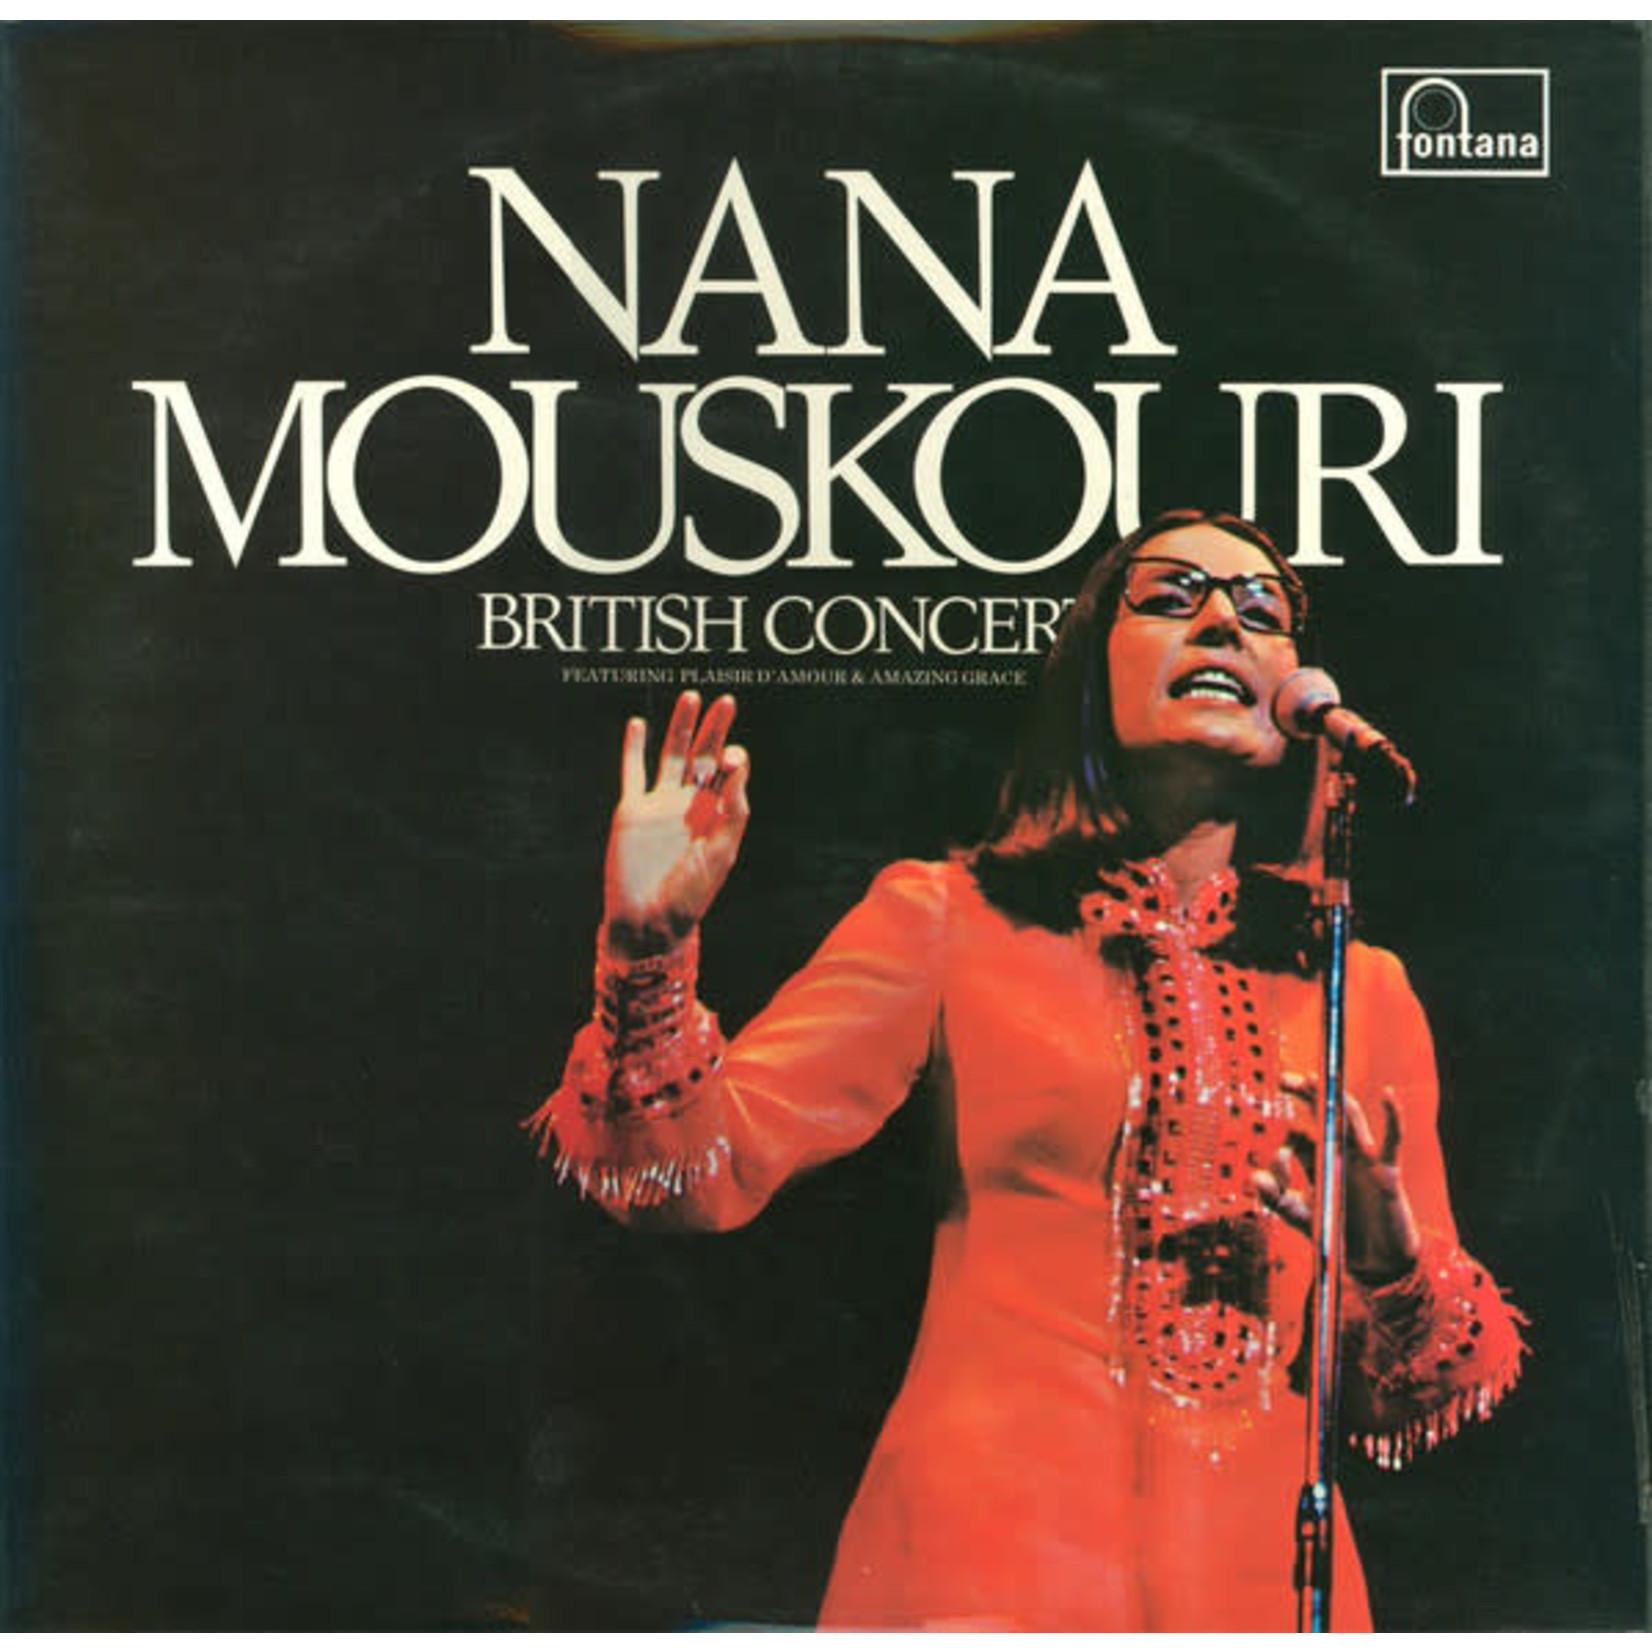 Nana Mouskouri Nana Mouskouri ‎– British Concert  (VG, 1972, LP, Fontana – 6651 003, Canada)